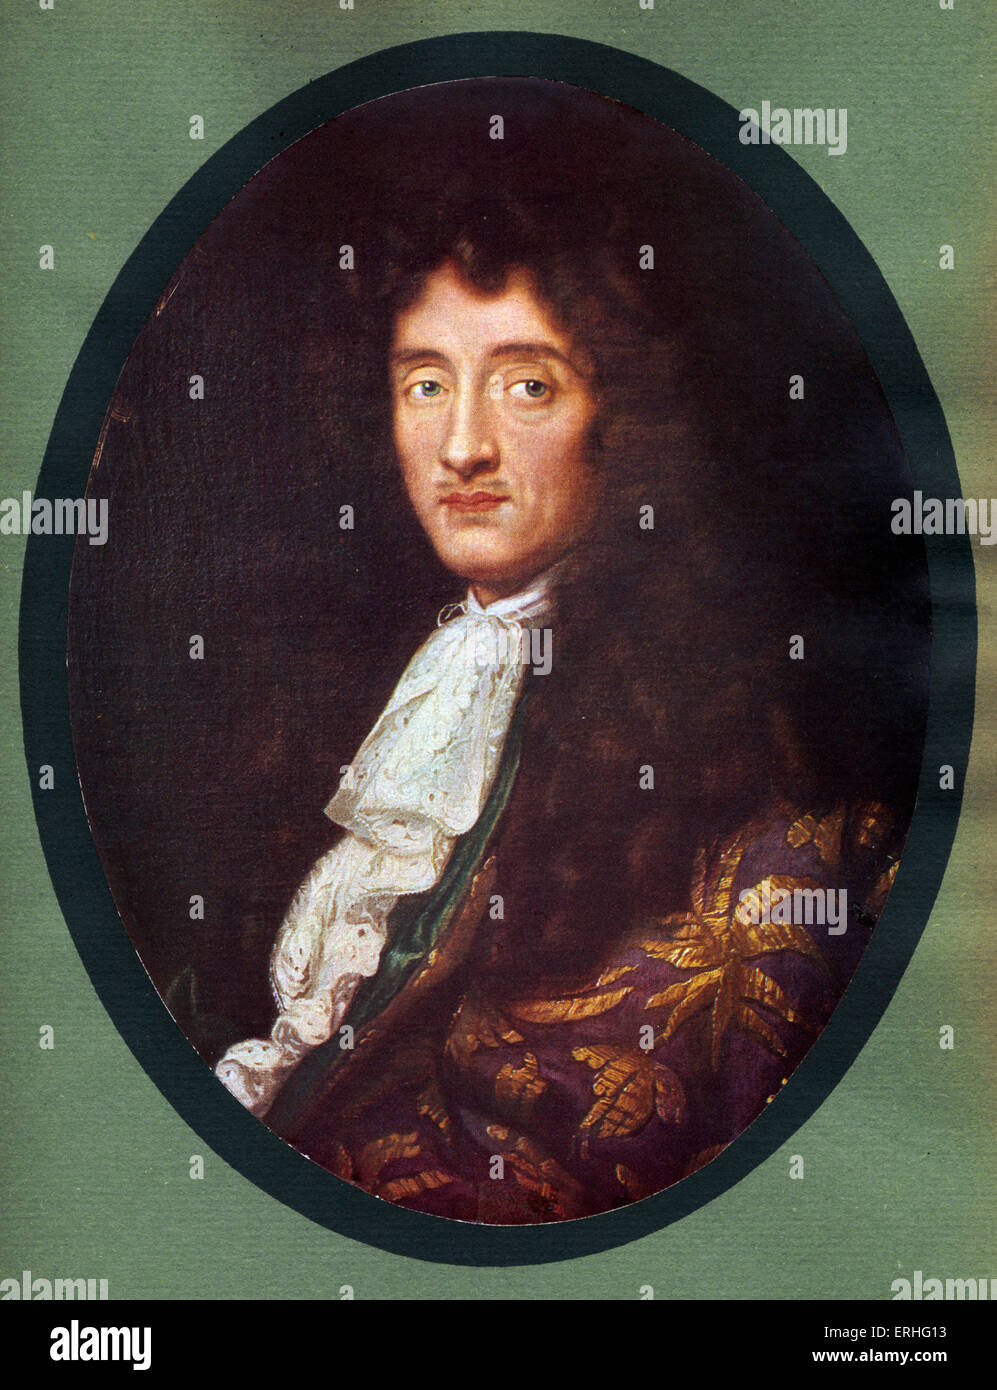 Jean Racine - Ritratto dopo una foto al Musée de Langres. In periwig e cravat. 20 dicembre 1639-21 aprile 1699. Tragico francese Drammaturgo, poeta, eletto alla Académie Française 1672. Foto Stock